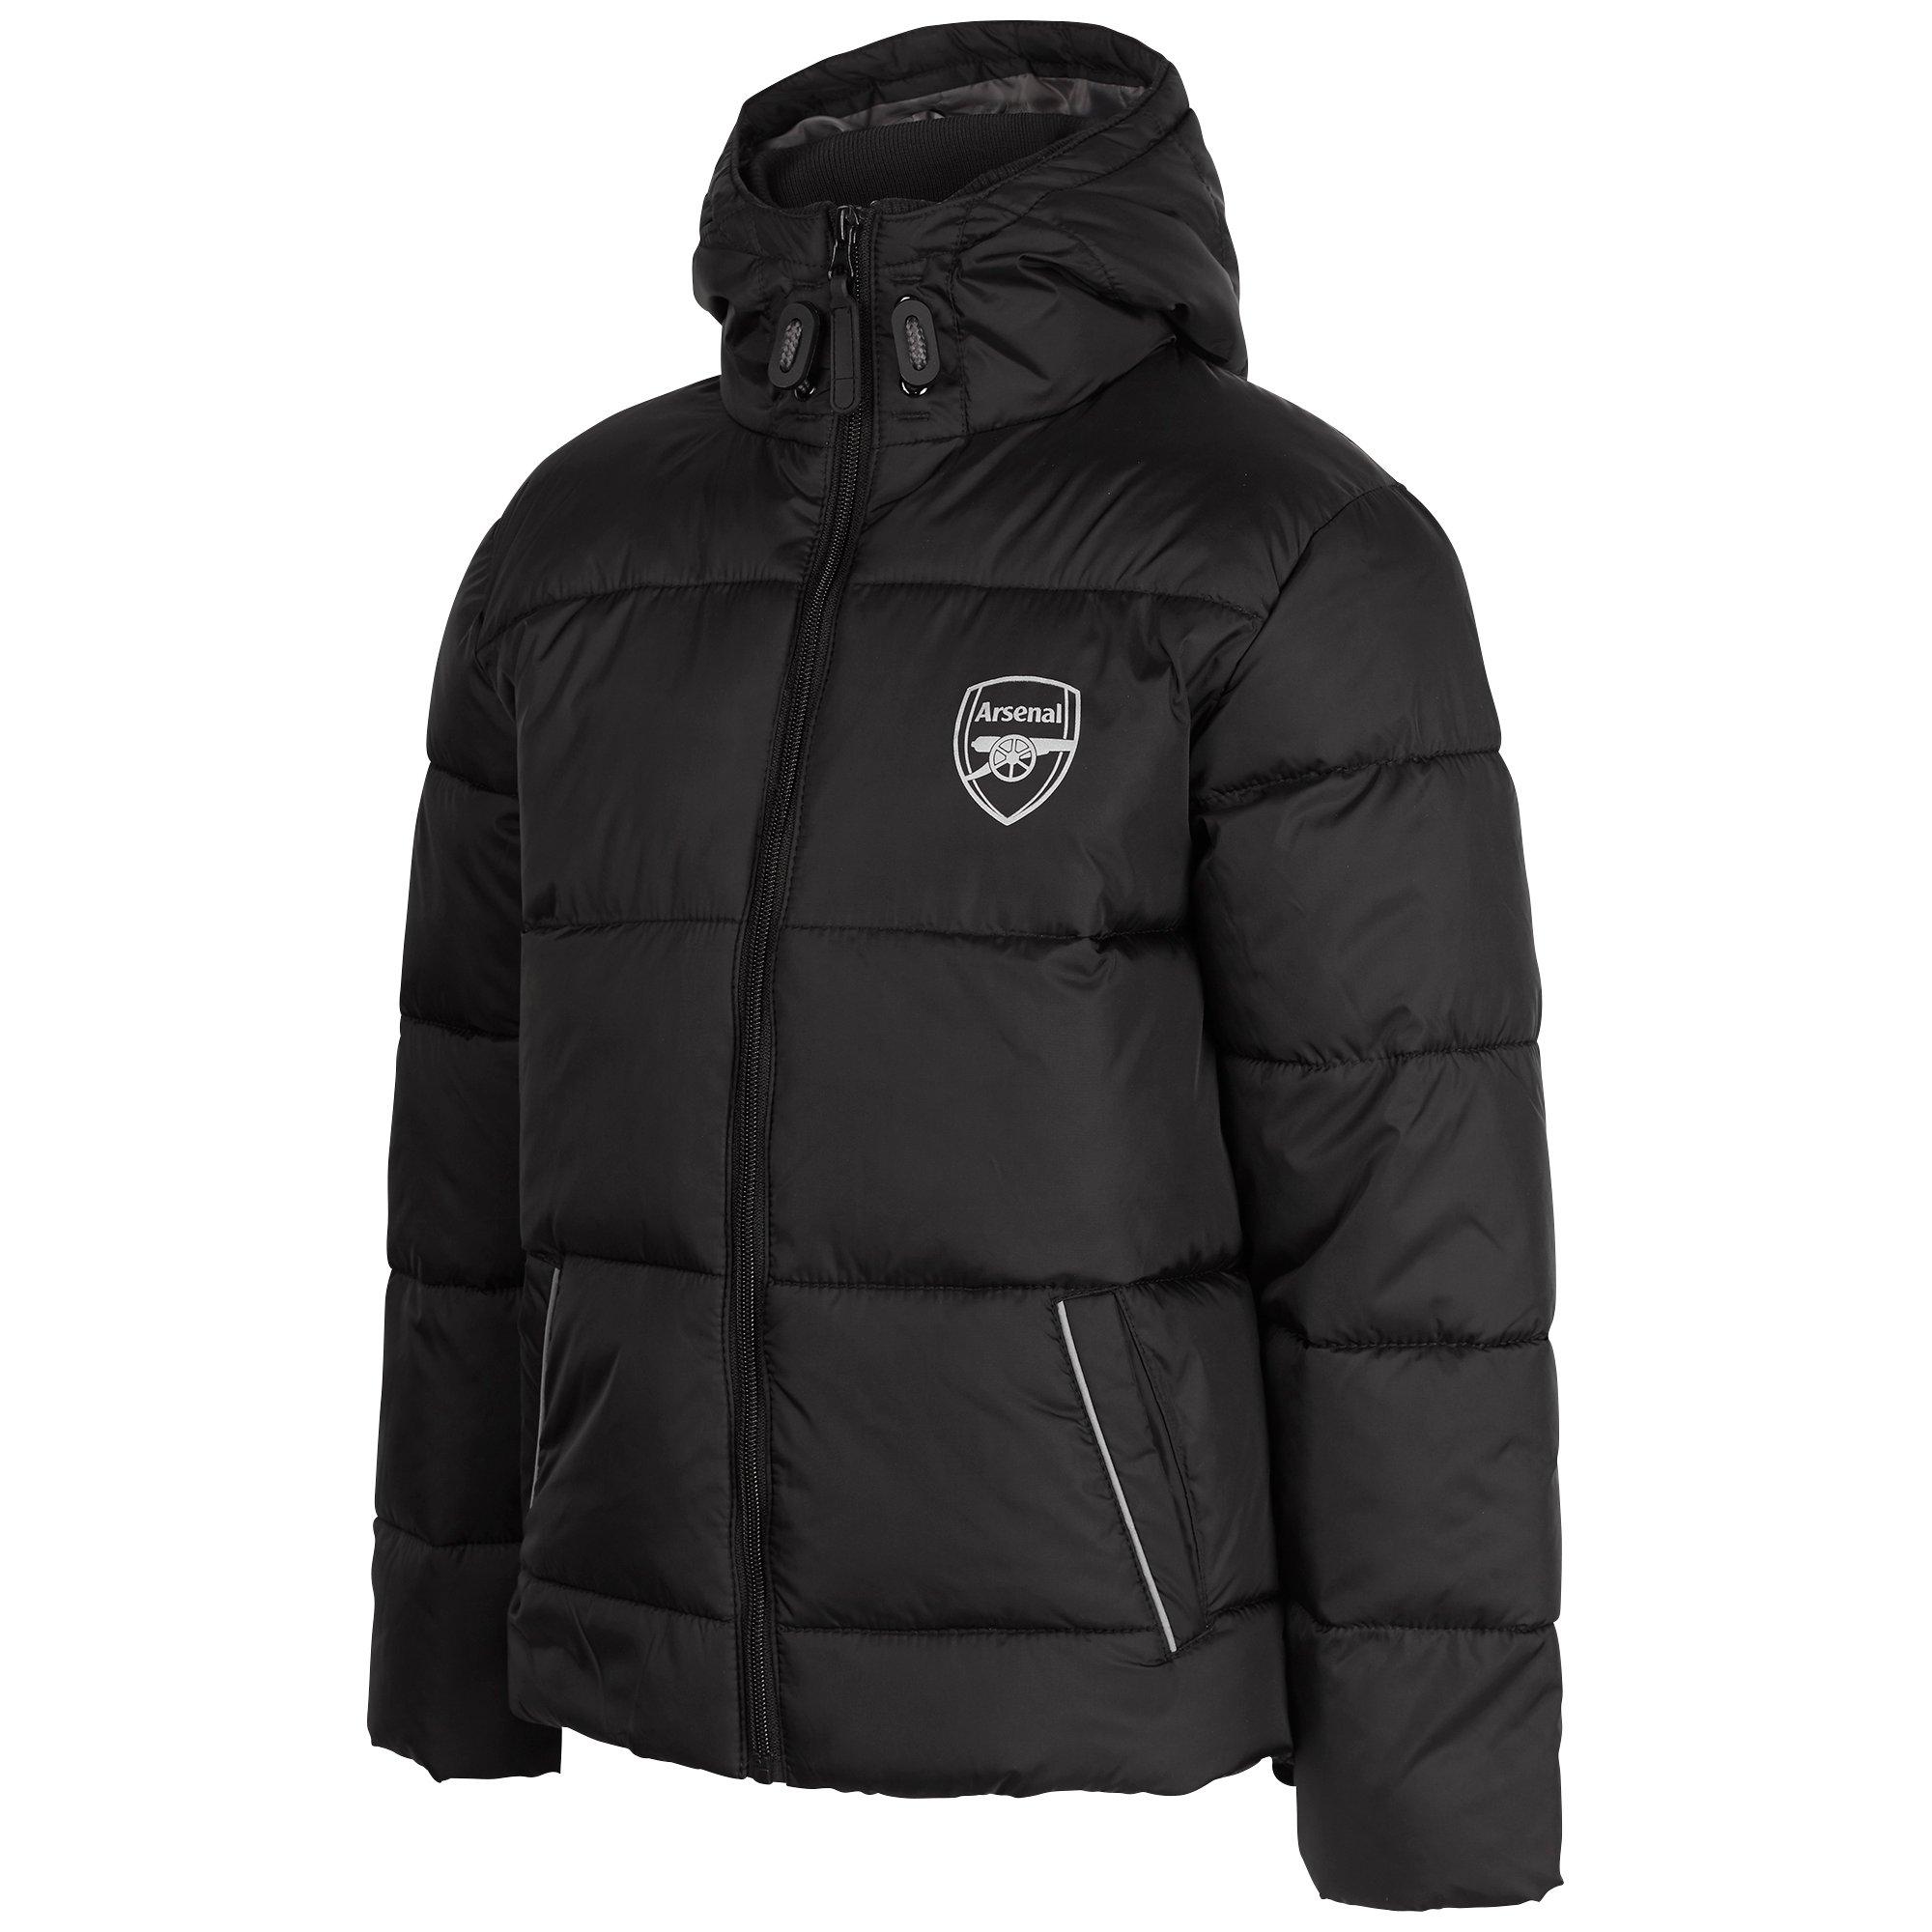 Arsenal Kids Black Padded Jacket | Official Online Store